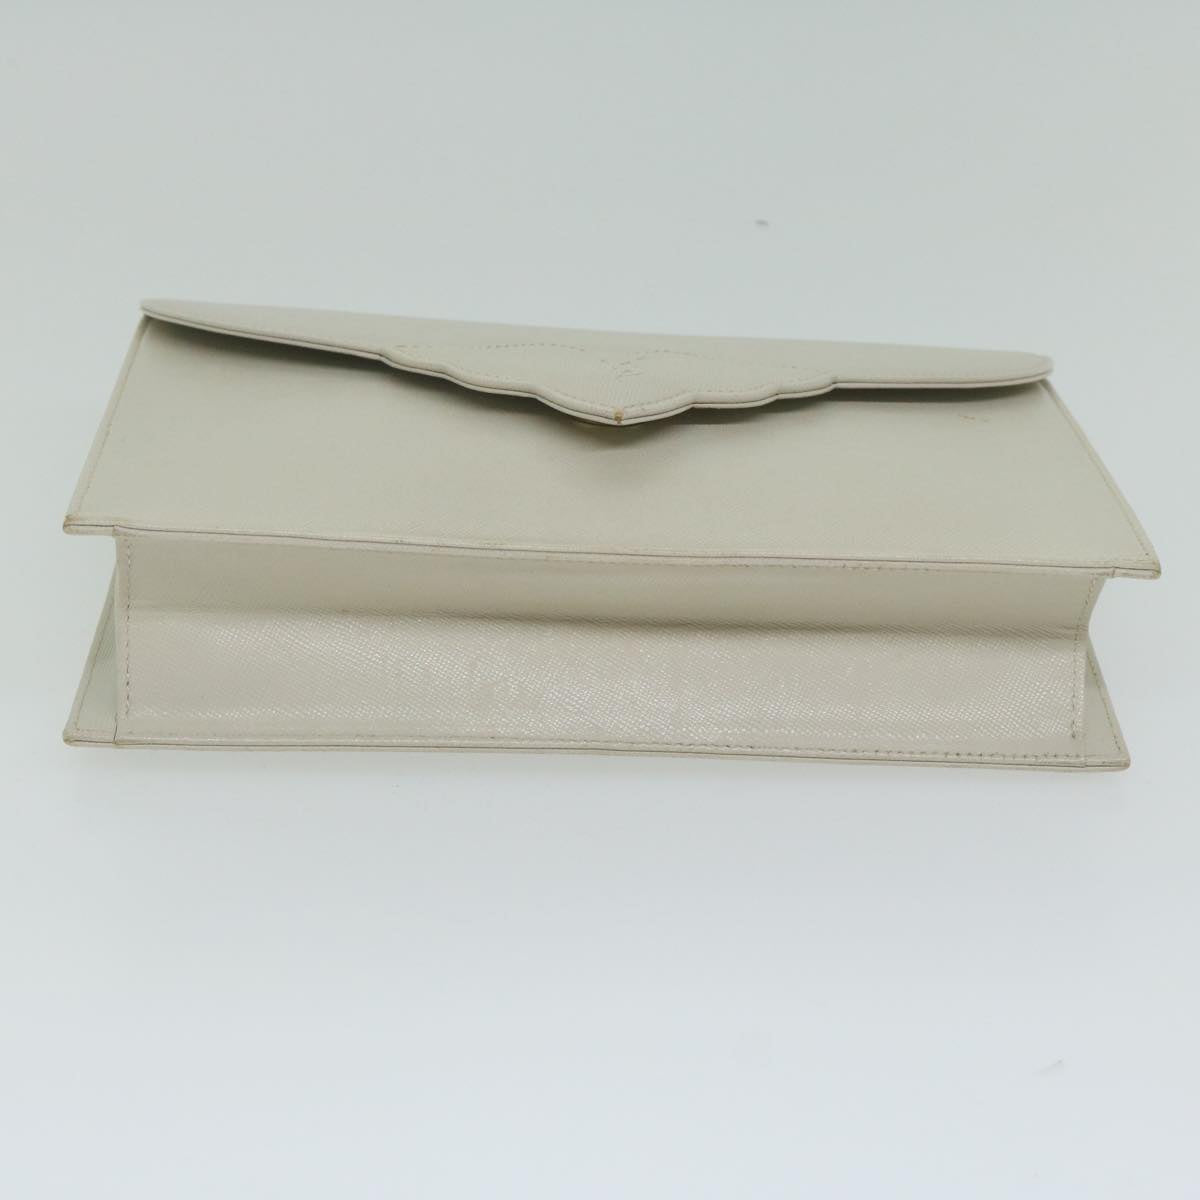 SAINT LAURENT Clutch Bag Leather White Auth ep2566